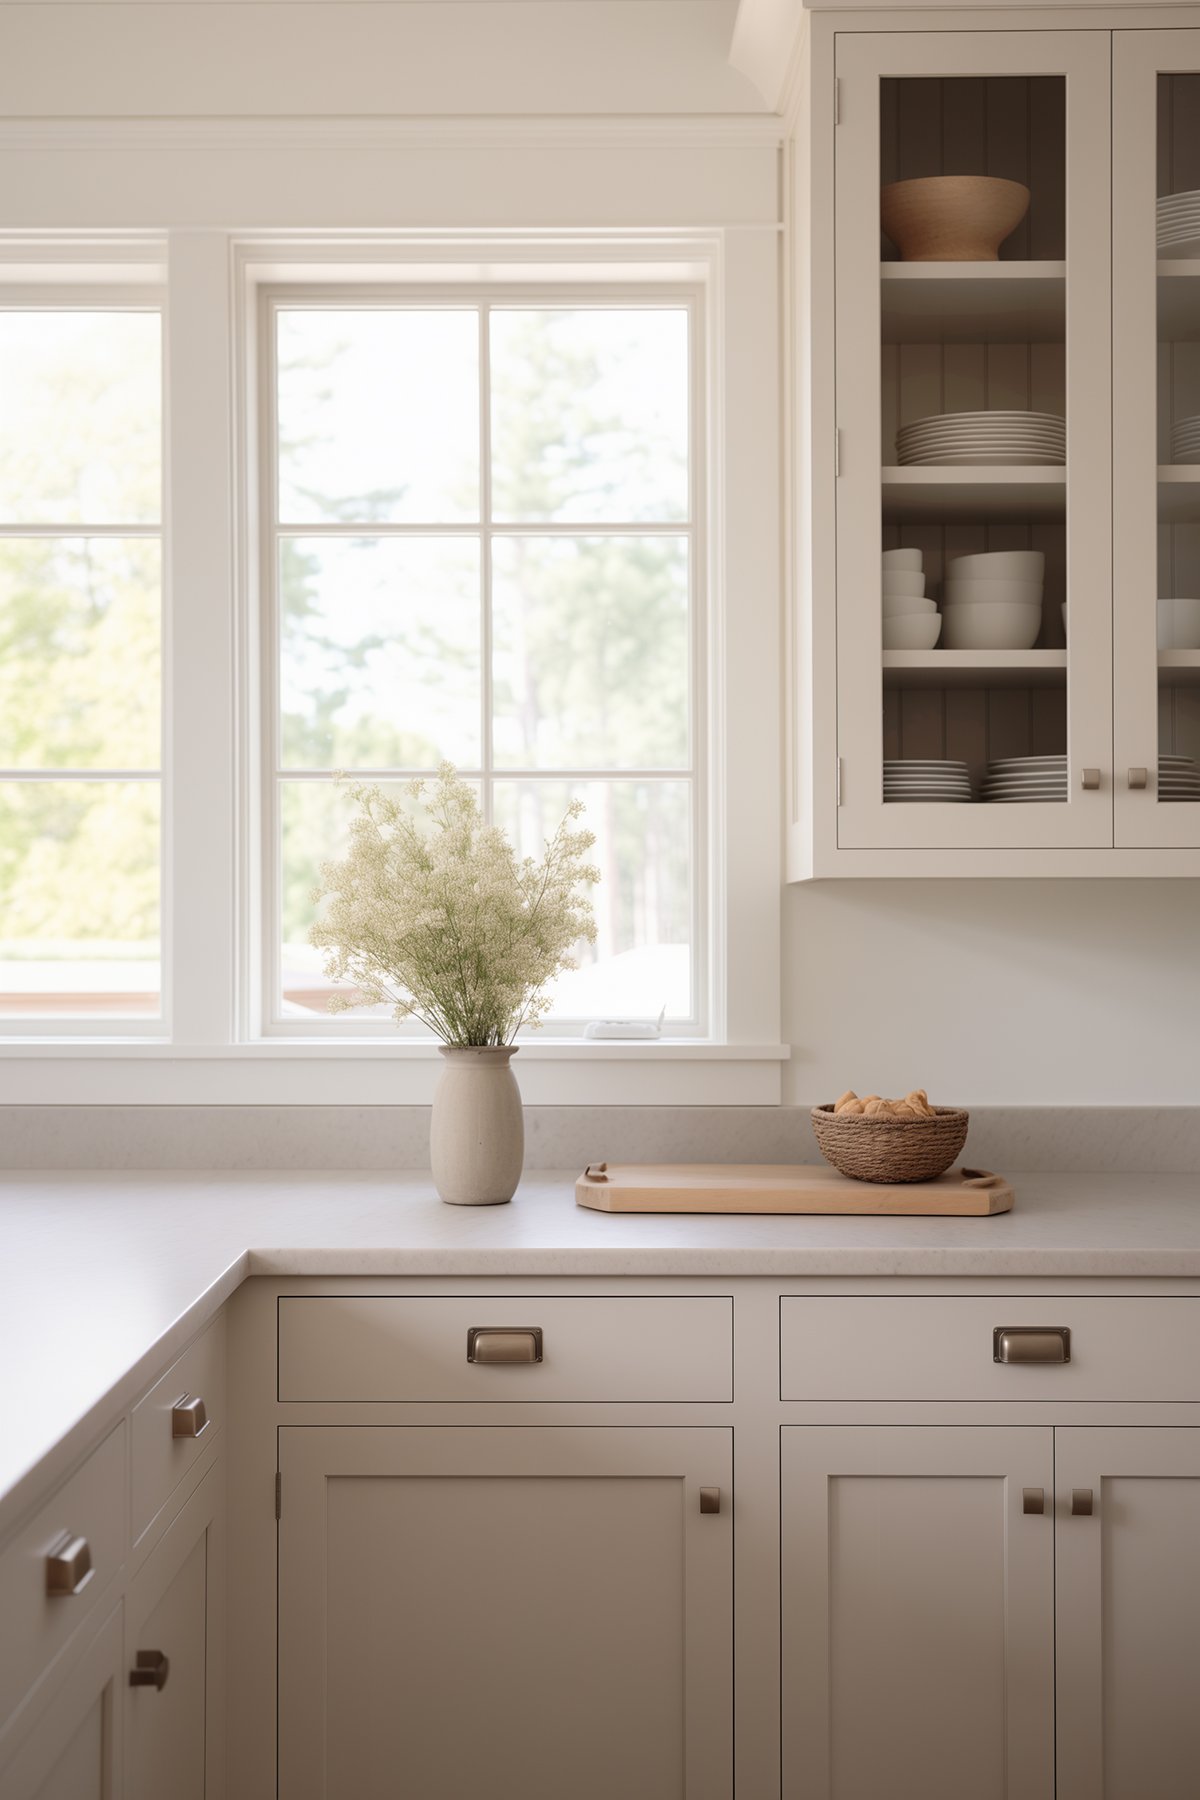 edgecomb gray kitchen cabinets